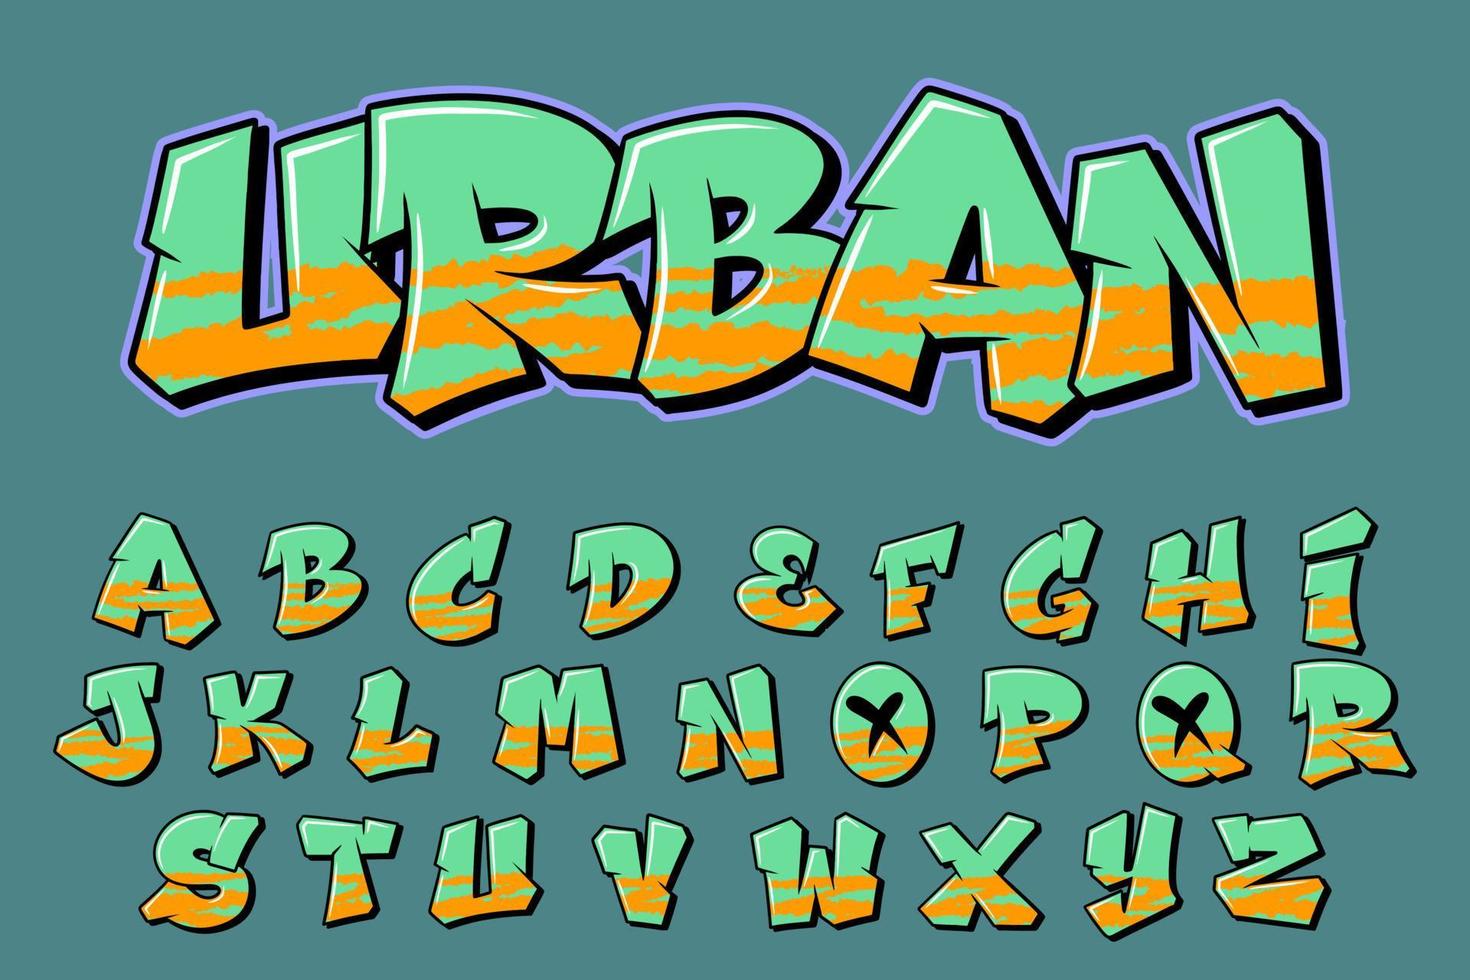 Urban Street Alphabet Graffiti text vector Letters